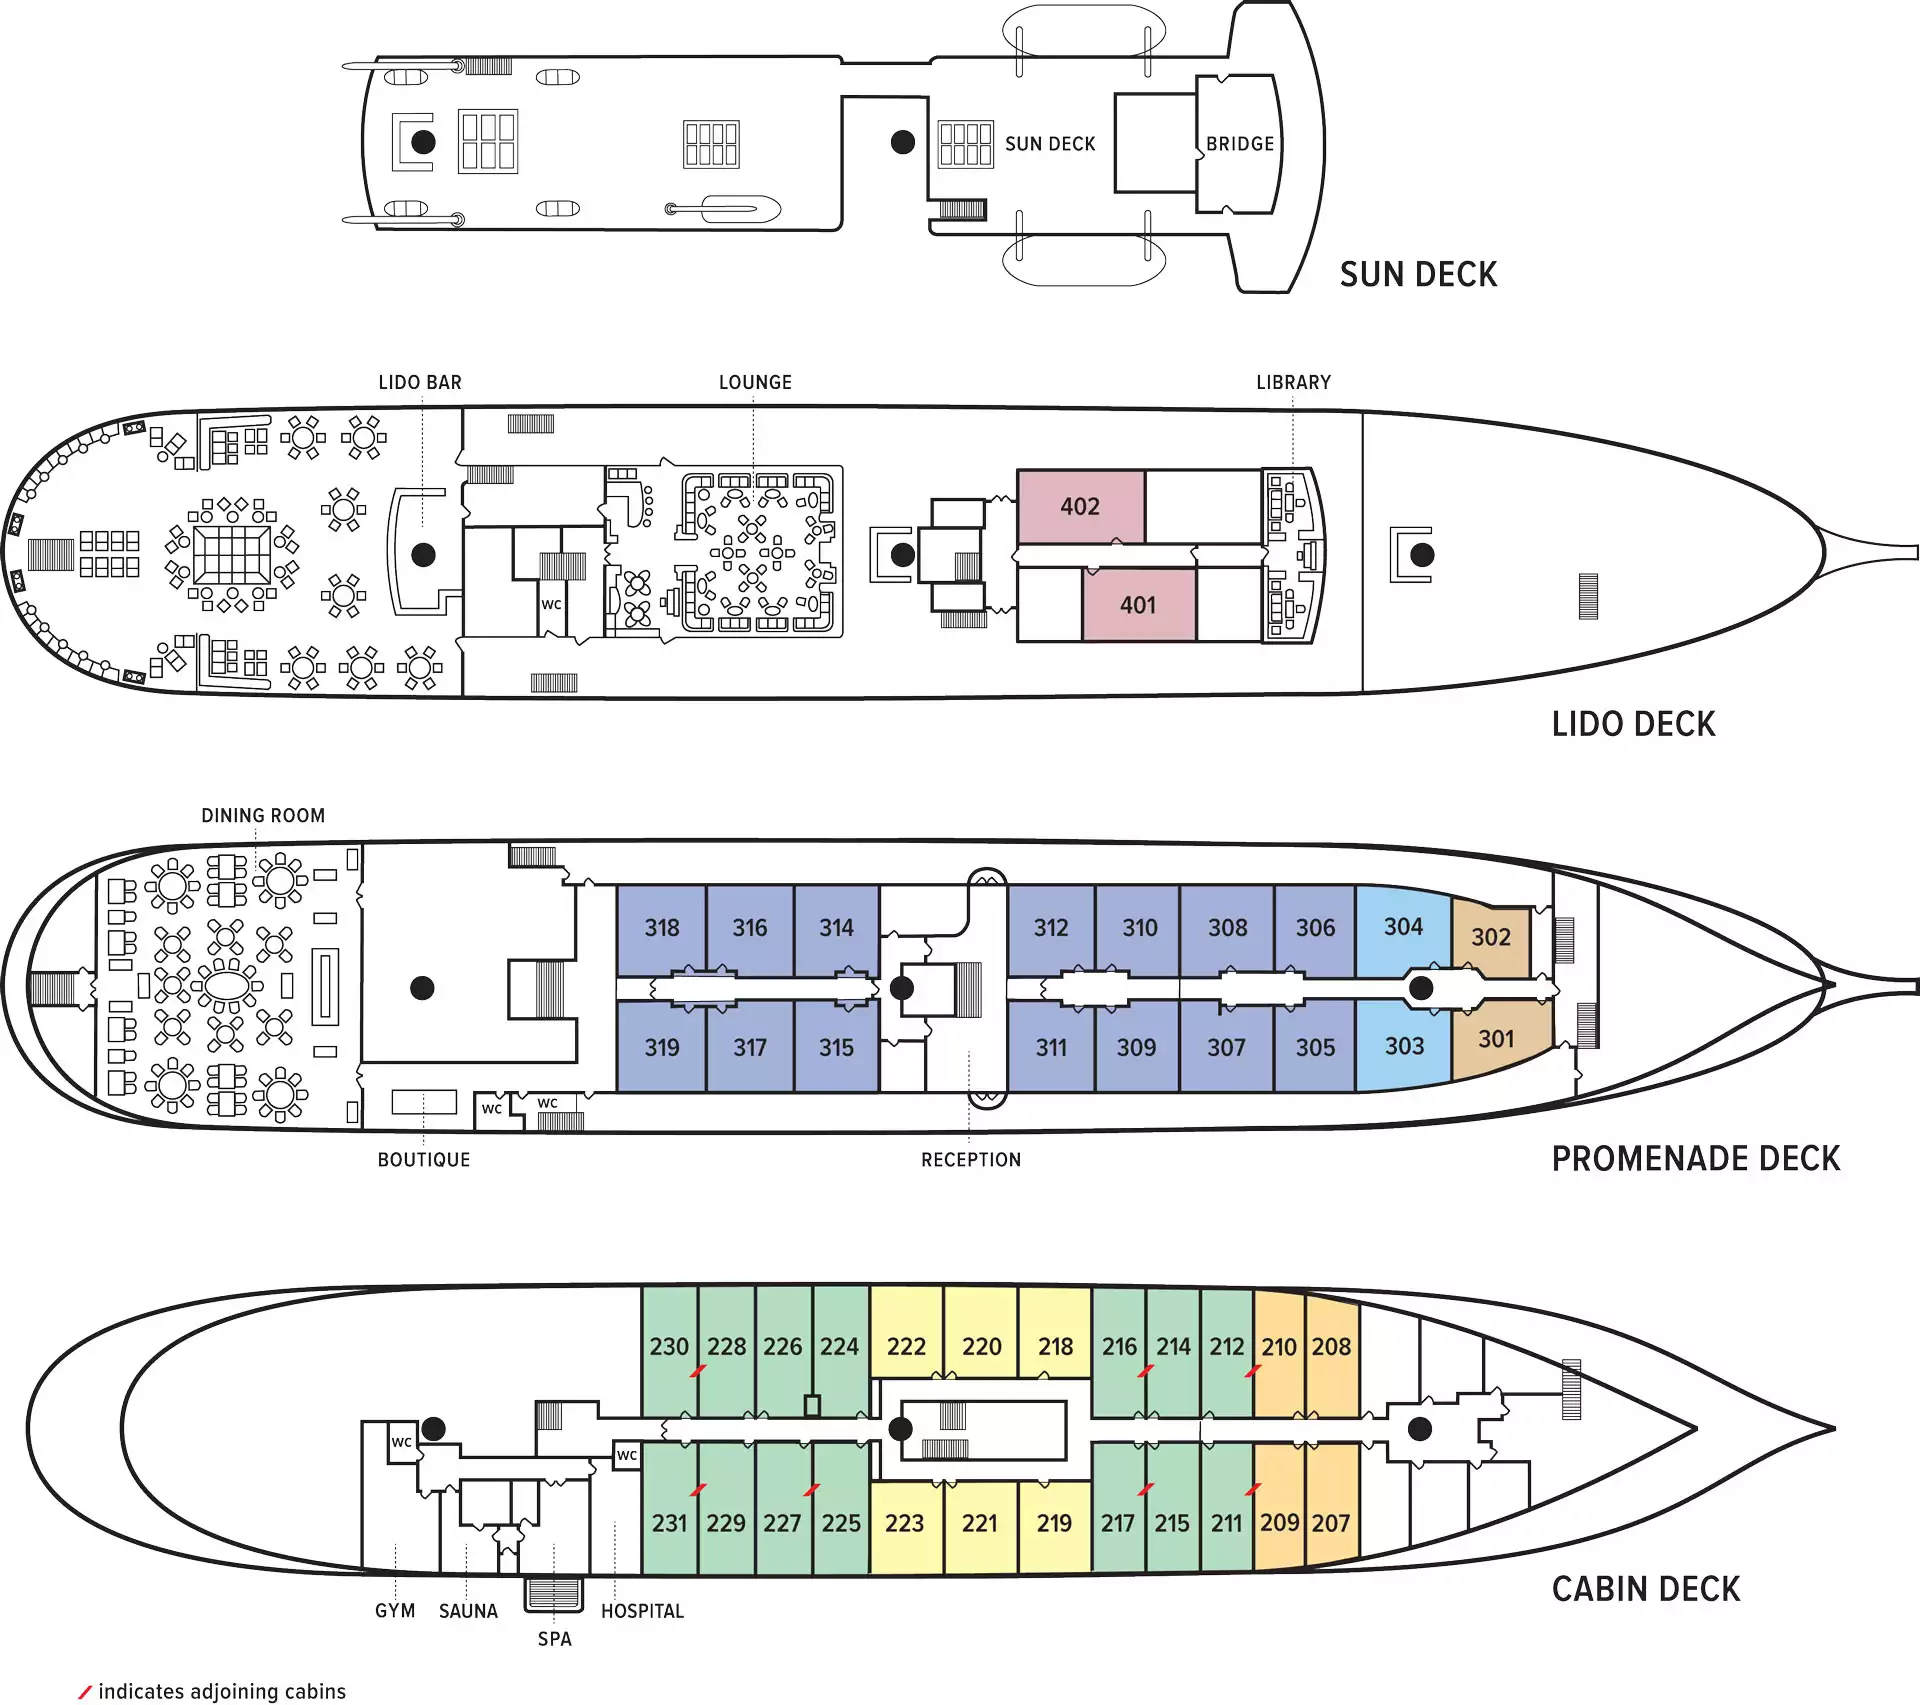 Deck plan of Sea Cloud II: Lindblad with 4 decks: Sun Deck, Lido Deck, Promenade Deck & Cabin Deck, cabins for 94 guests, lounge, bar, library, dining room, bridge, gym, sauna, spa & more.